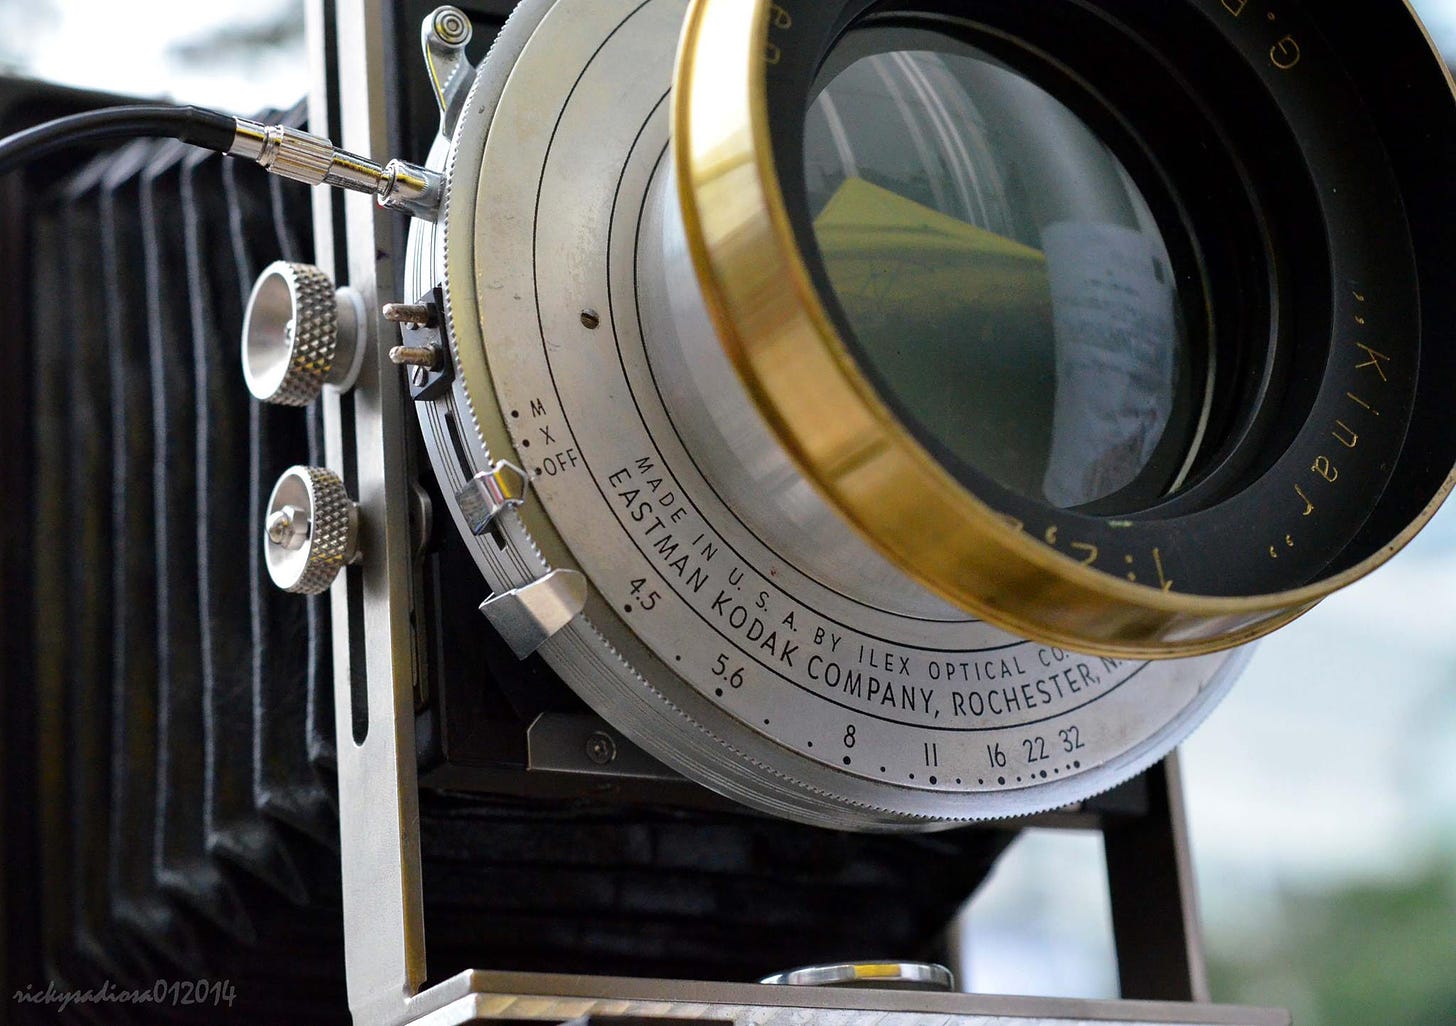 Closeup of an old Kodak camera